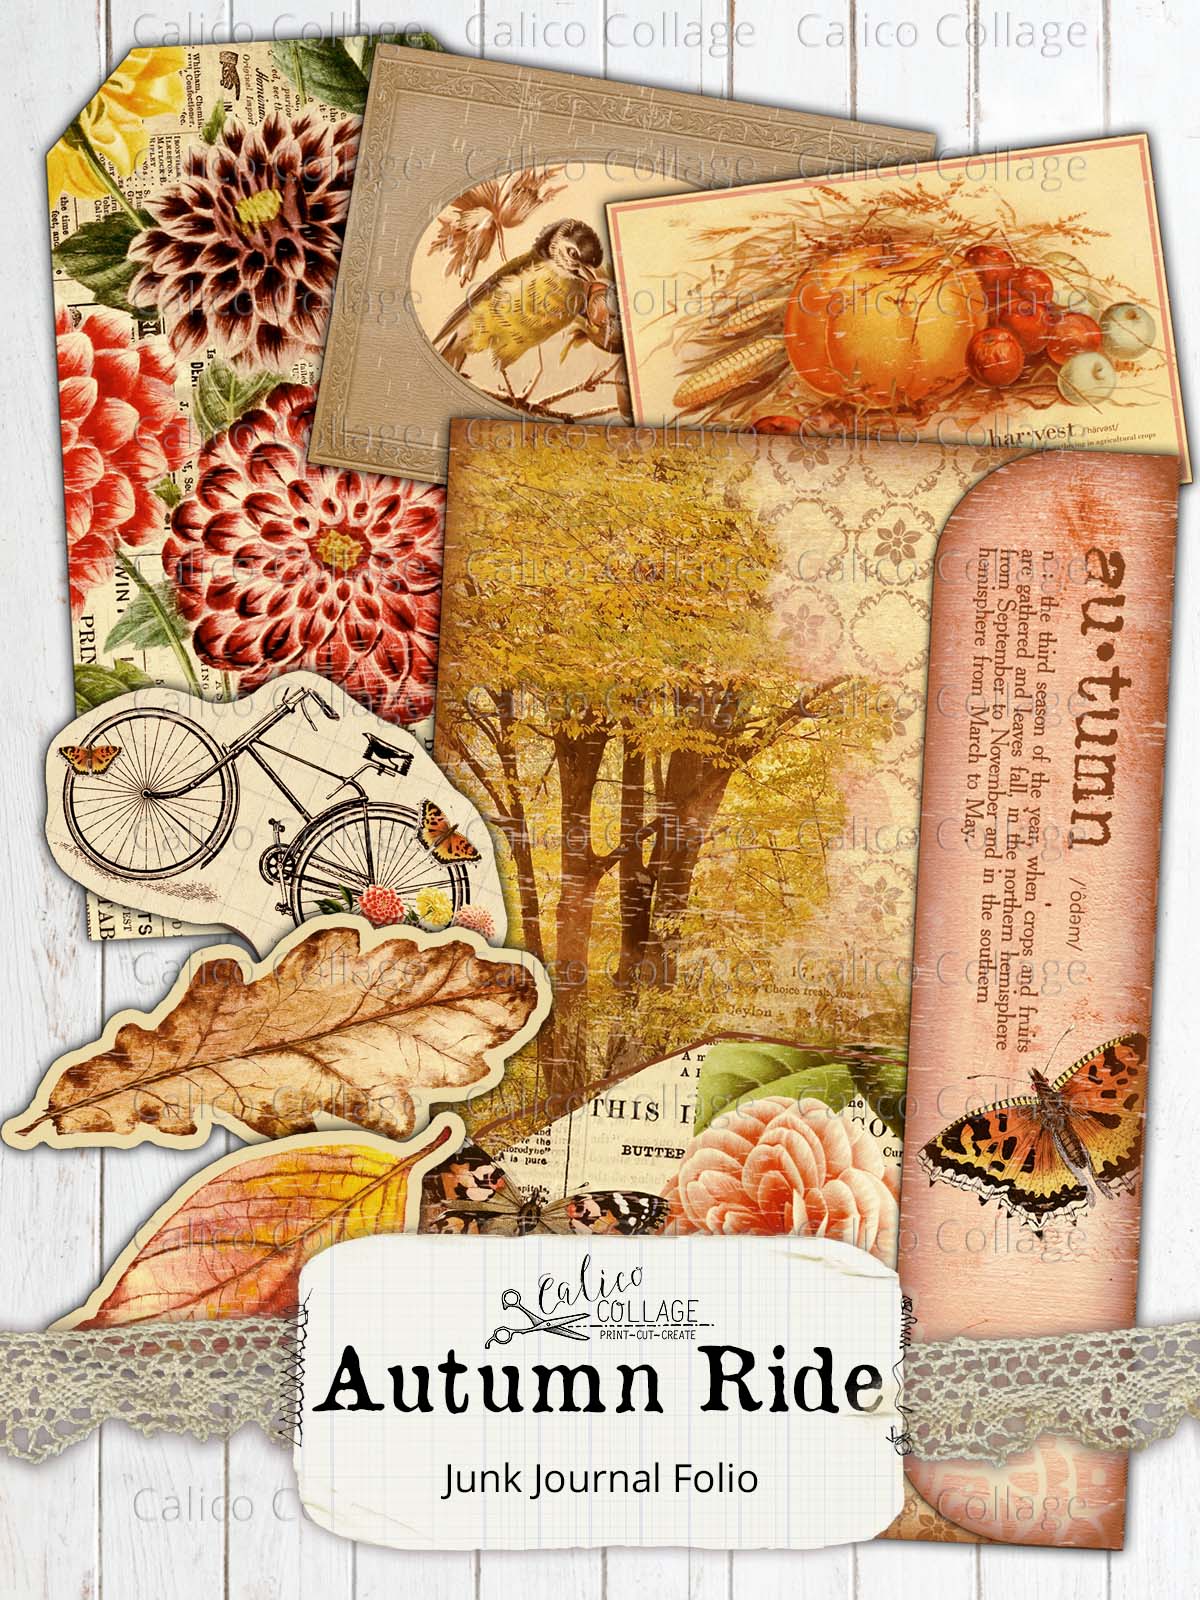 Women of Autumn Digital Journal Kit, Printable Autumn, Fall Journal, Art  Journal, Junk Journal Kit, Autumn 